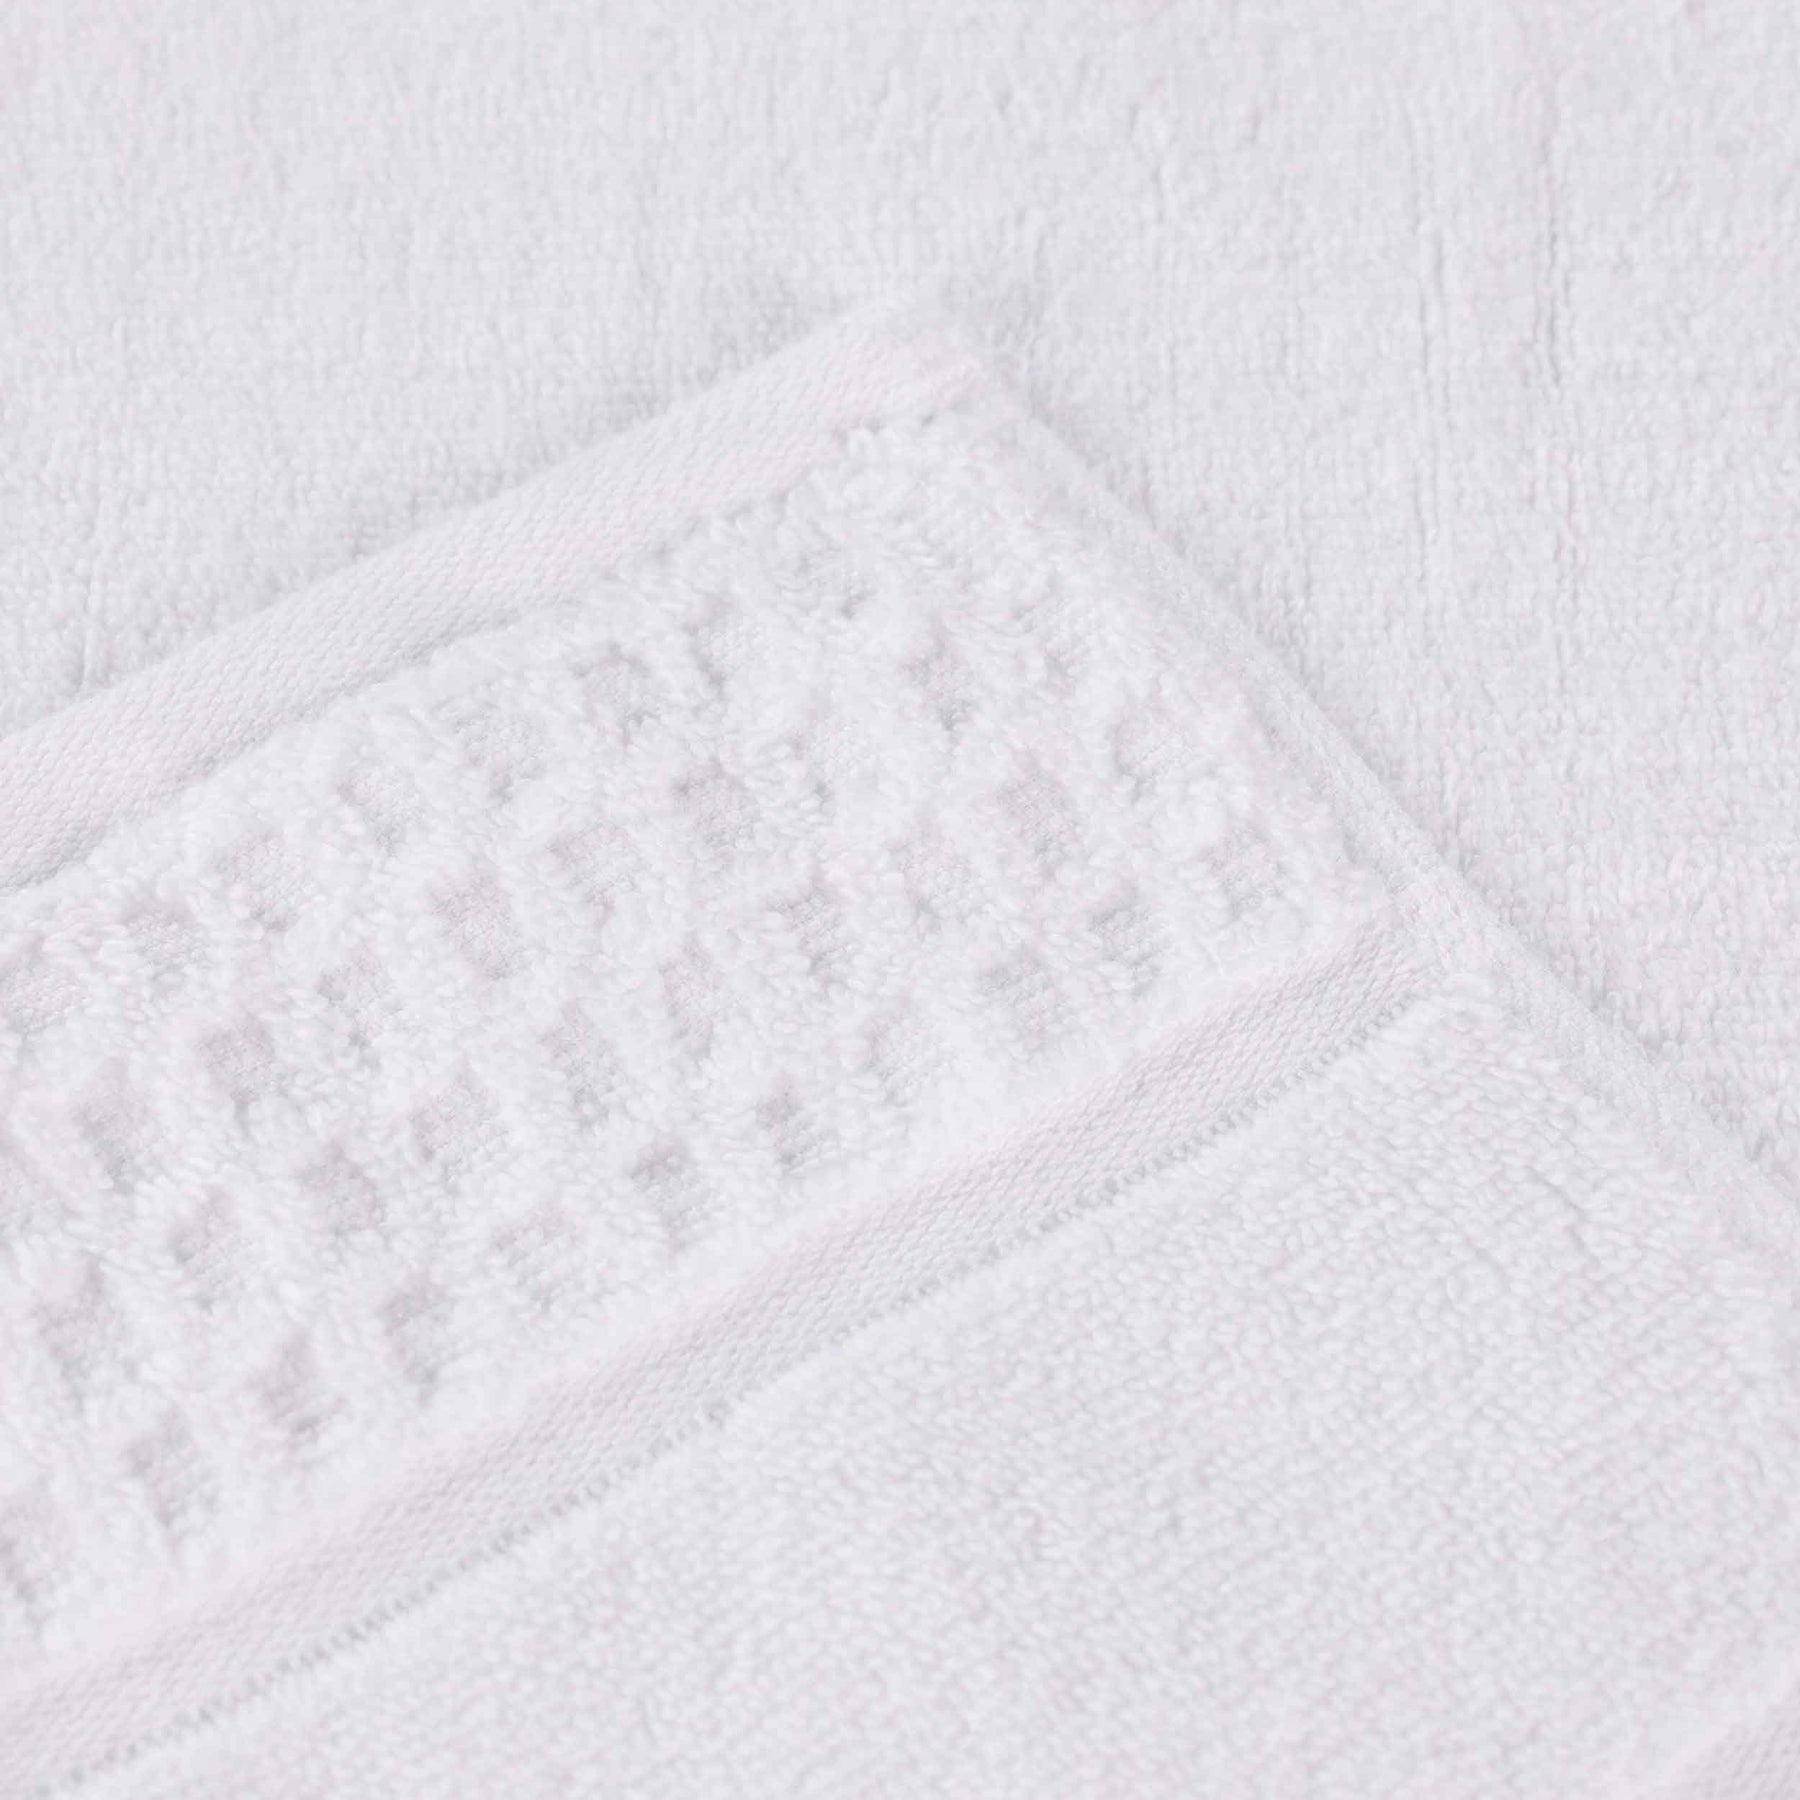 Zero Twist Cotton Waffle Honeycomb Plush Absorbent 6 Piece Towel Set - White